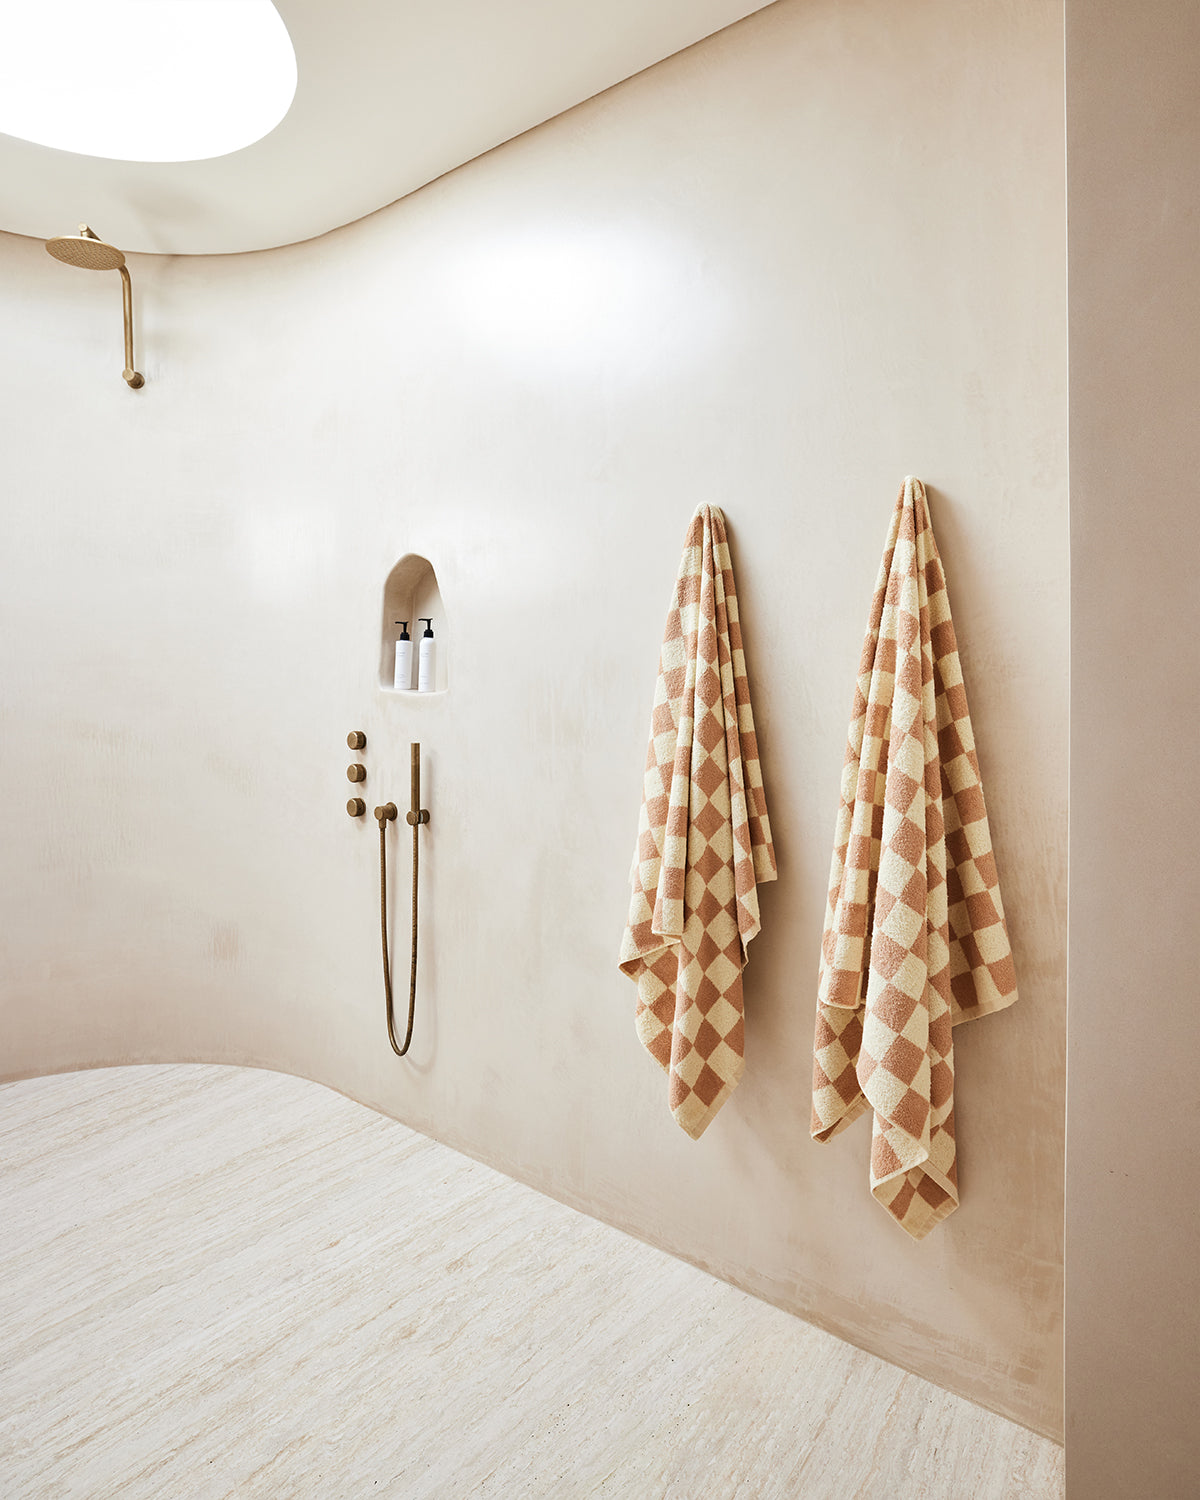 Limoncello & Terracotta Check 100% French Flax Linen Terry Bath Towel